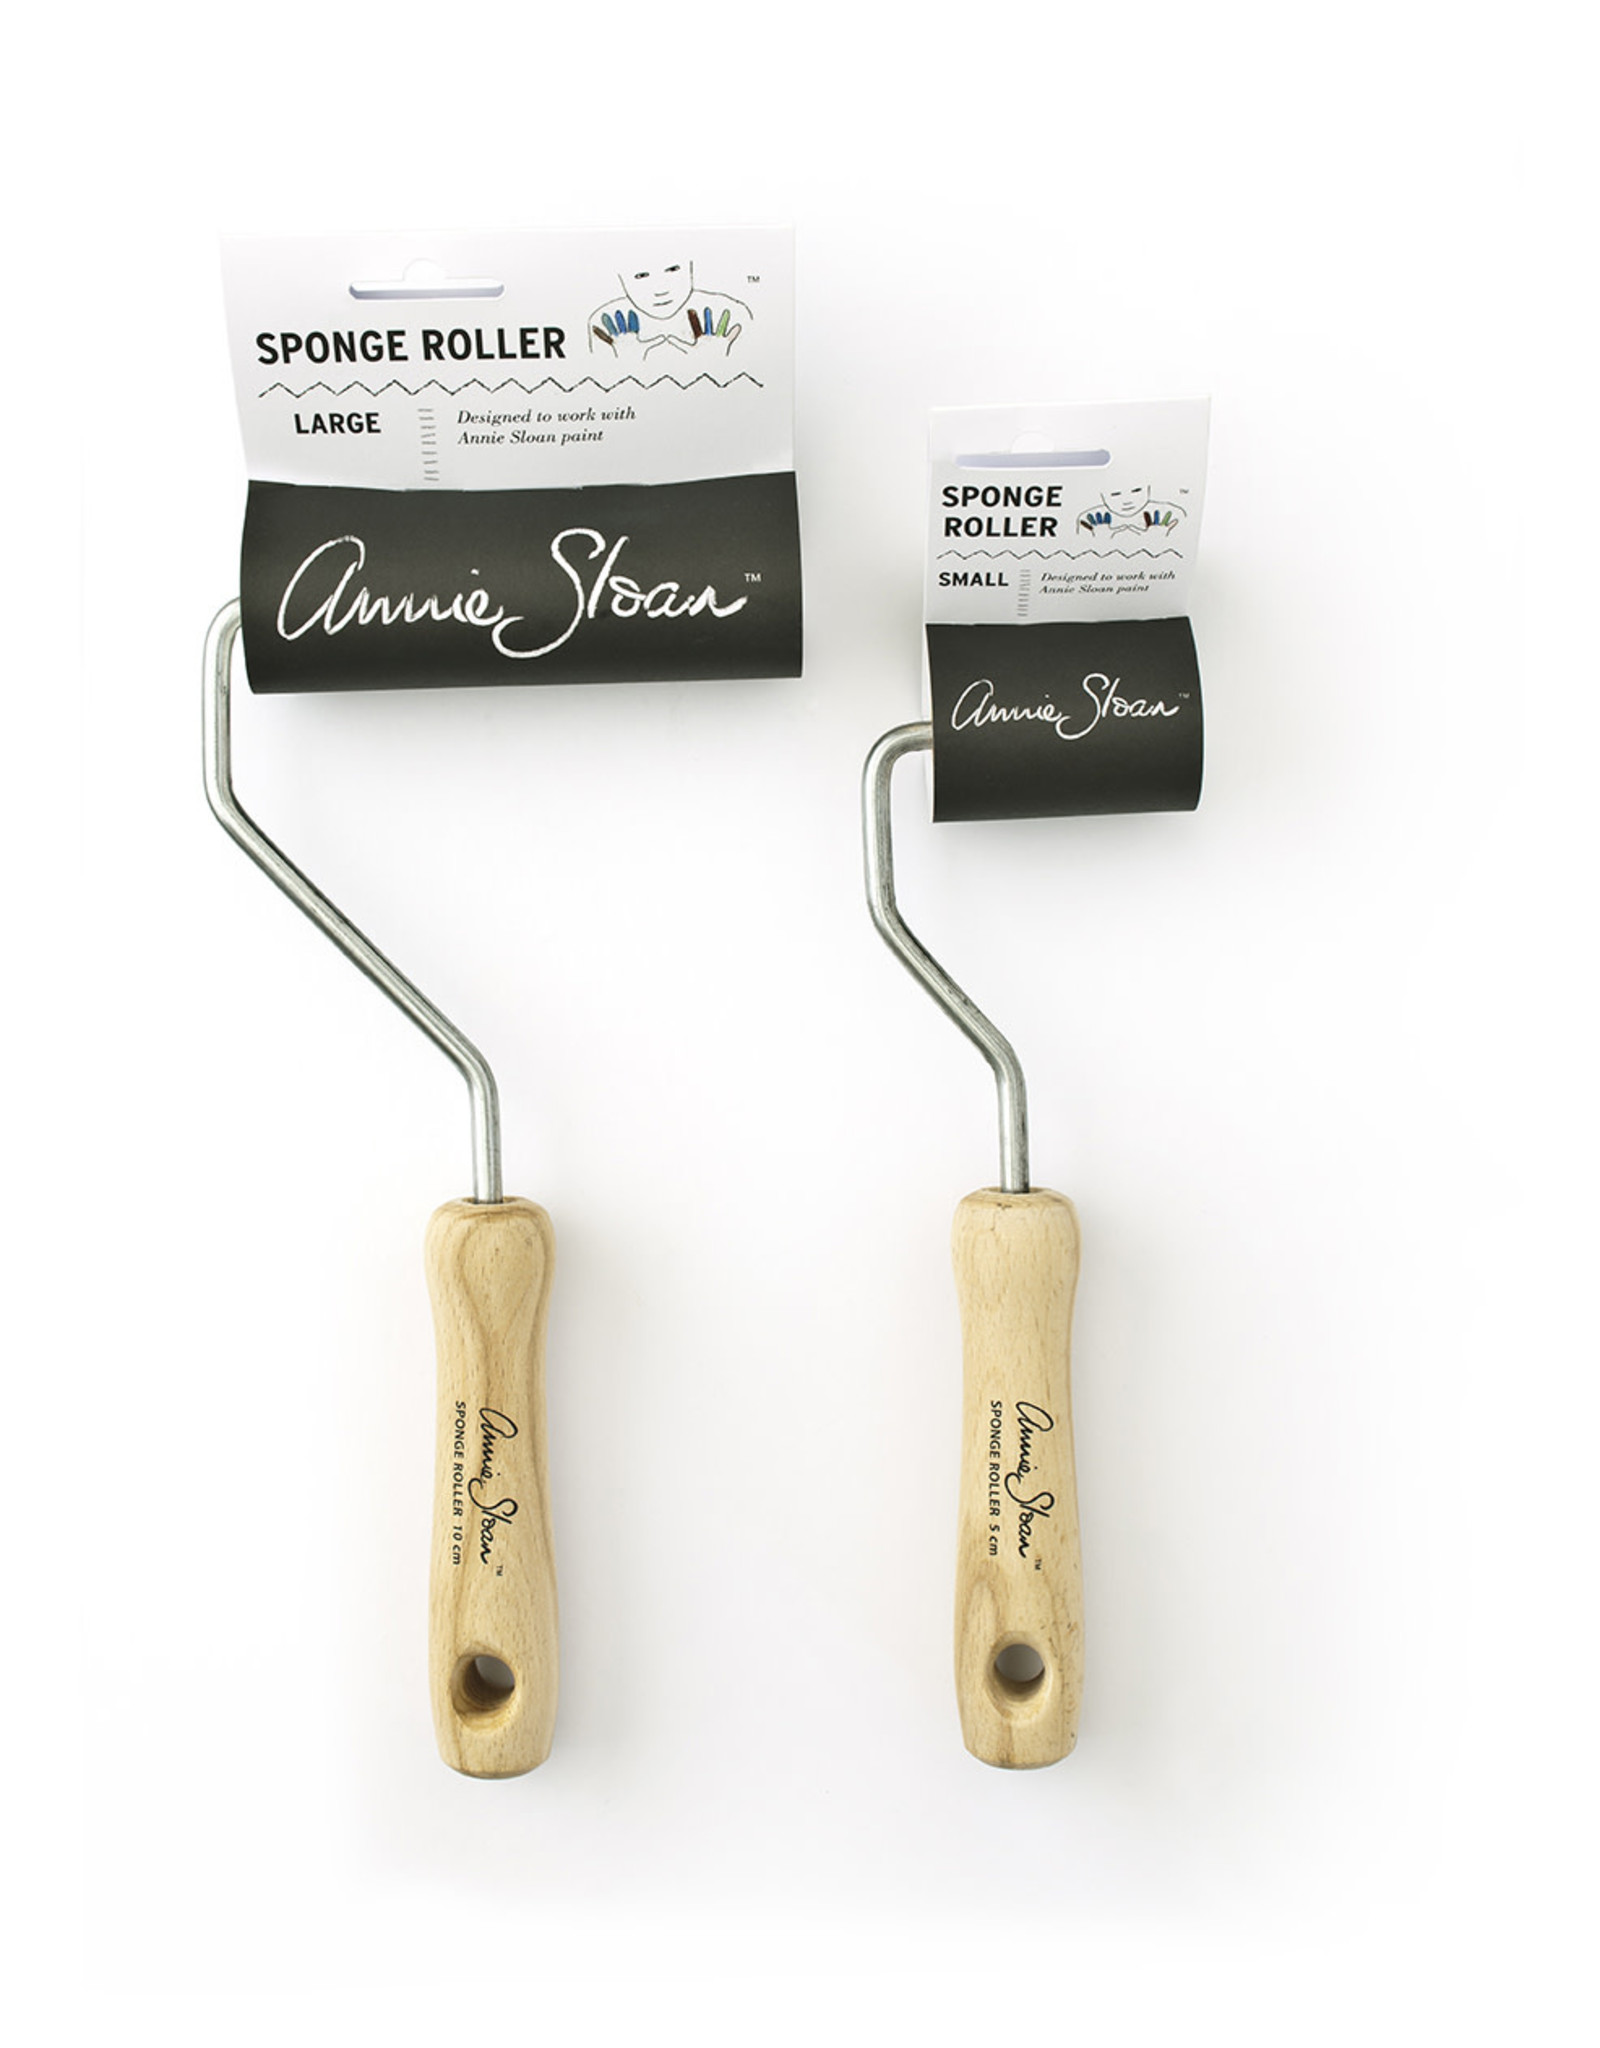 Annie Sloan Sponge Rollers Brush by Annie Sloan - Large